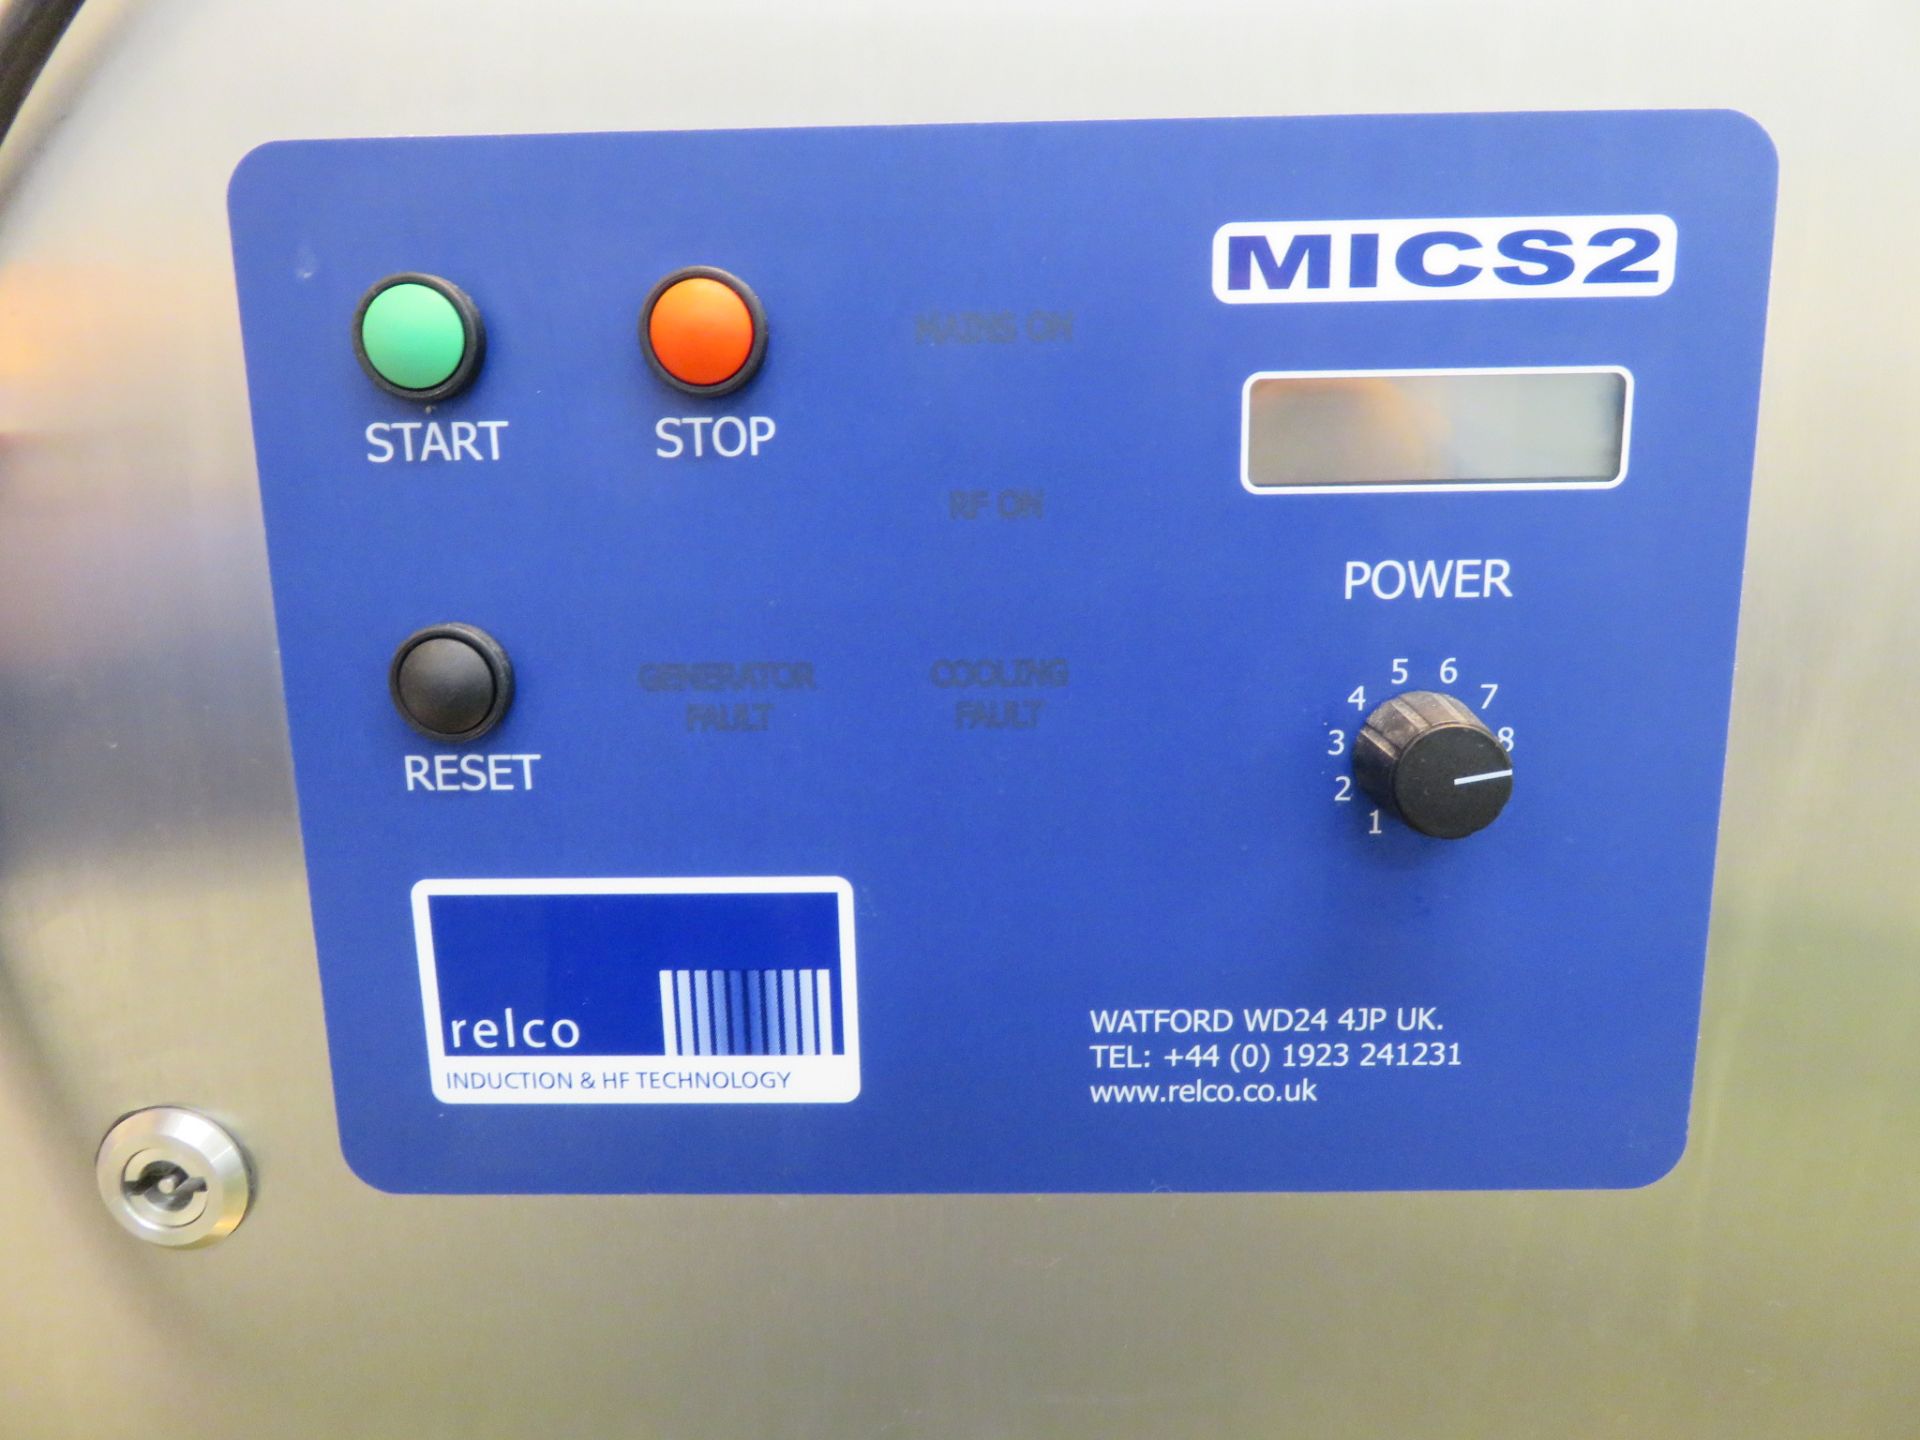 HF Technology induction sealing machine model MICS 2. LO £60. - Image 5 of 5